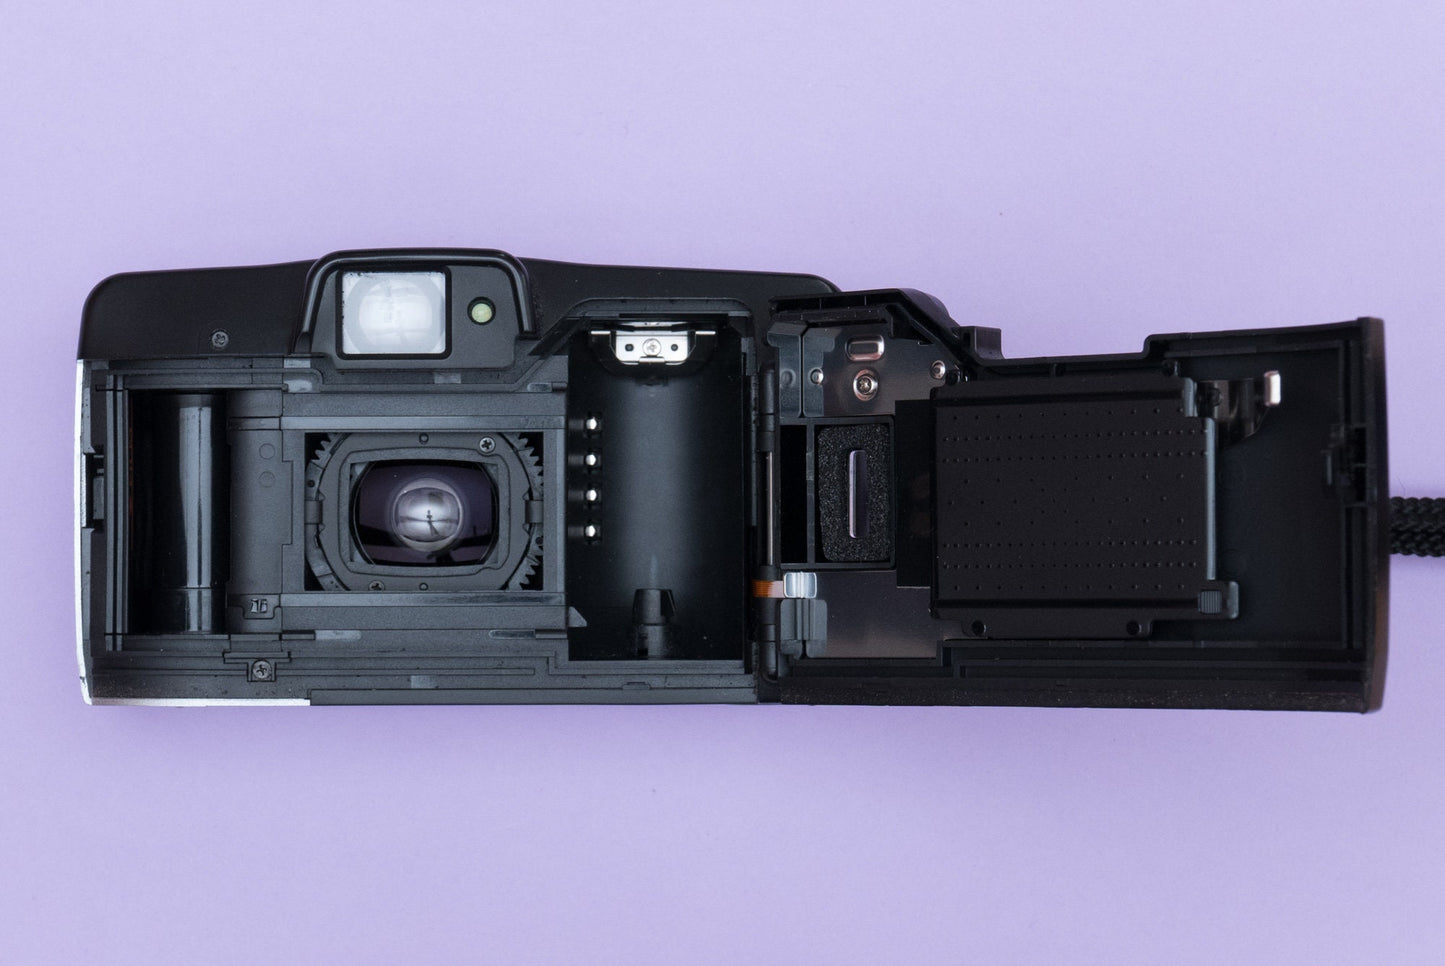 Canon Prima Zoom 65 Ai AF Compact 35mm Film Camera